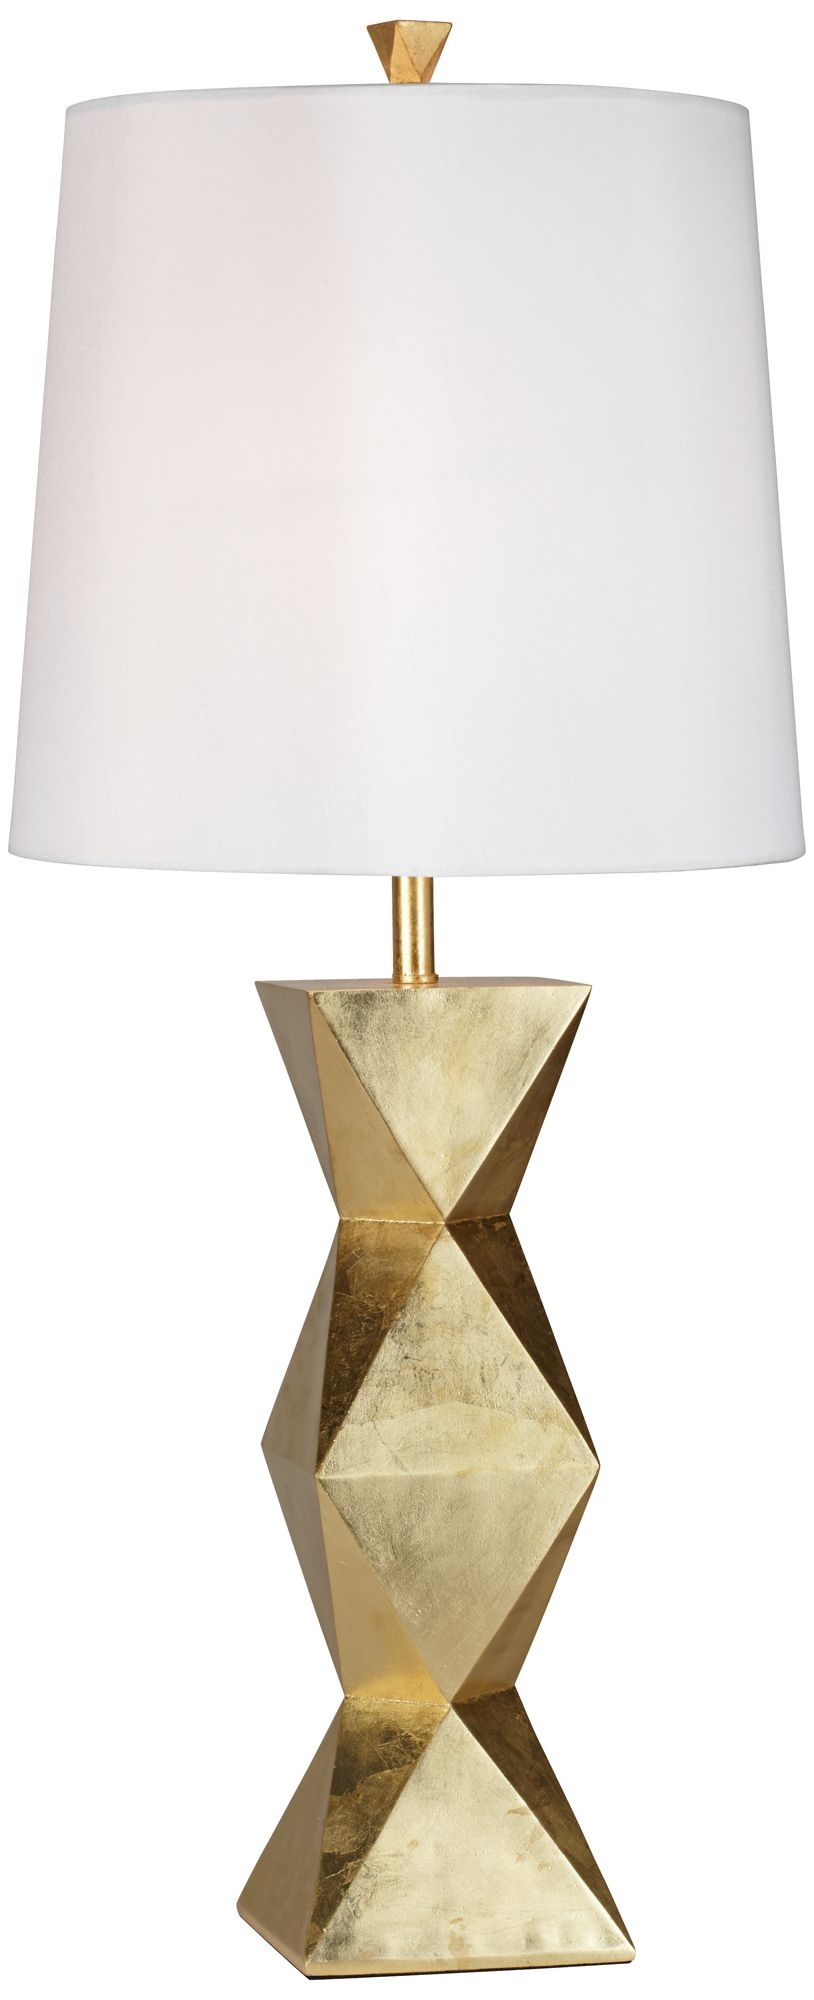 Ripley Gold Table Lamp - Image 0